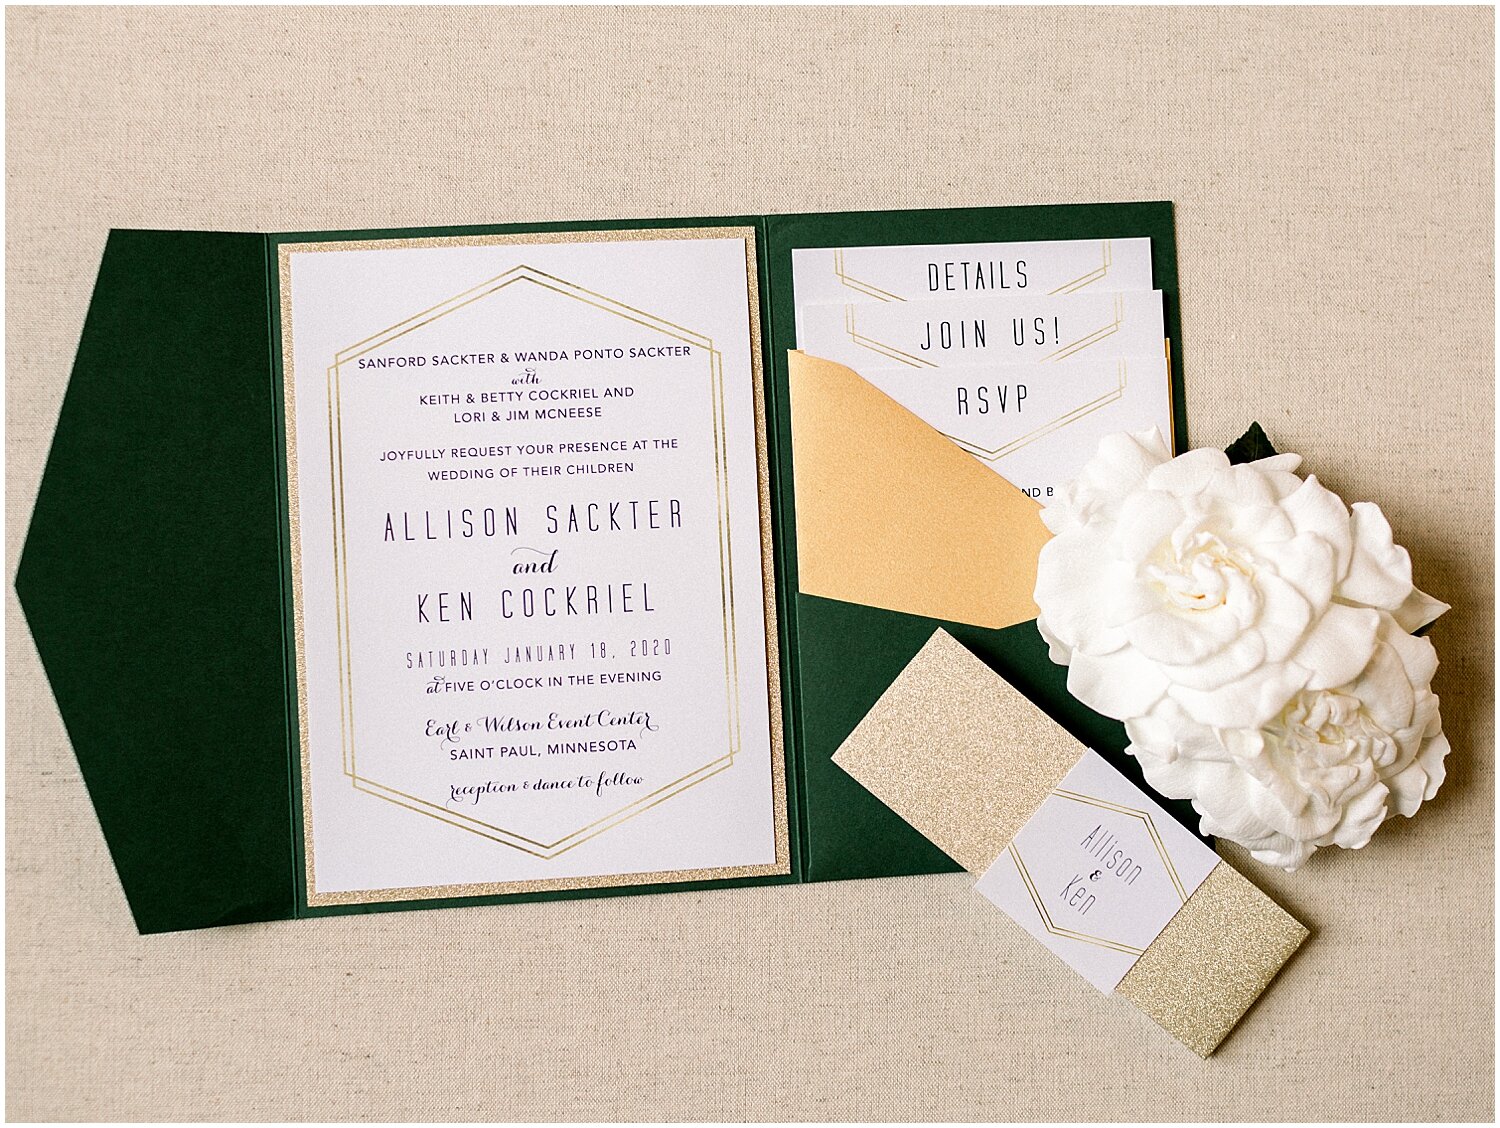  Minneapolis wedding invitation layout 